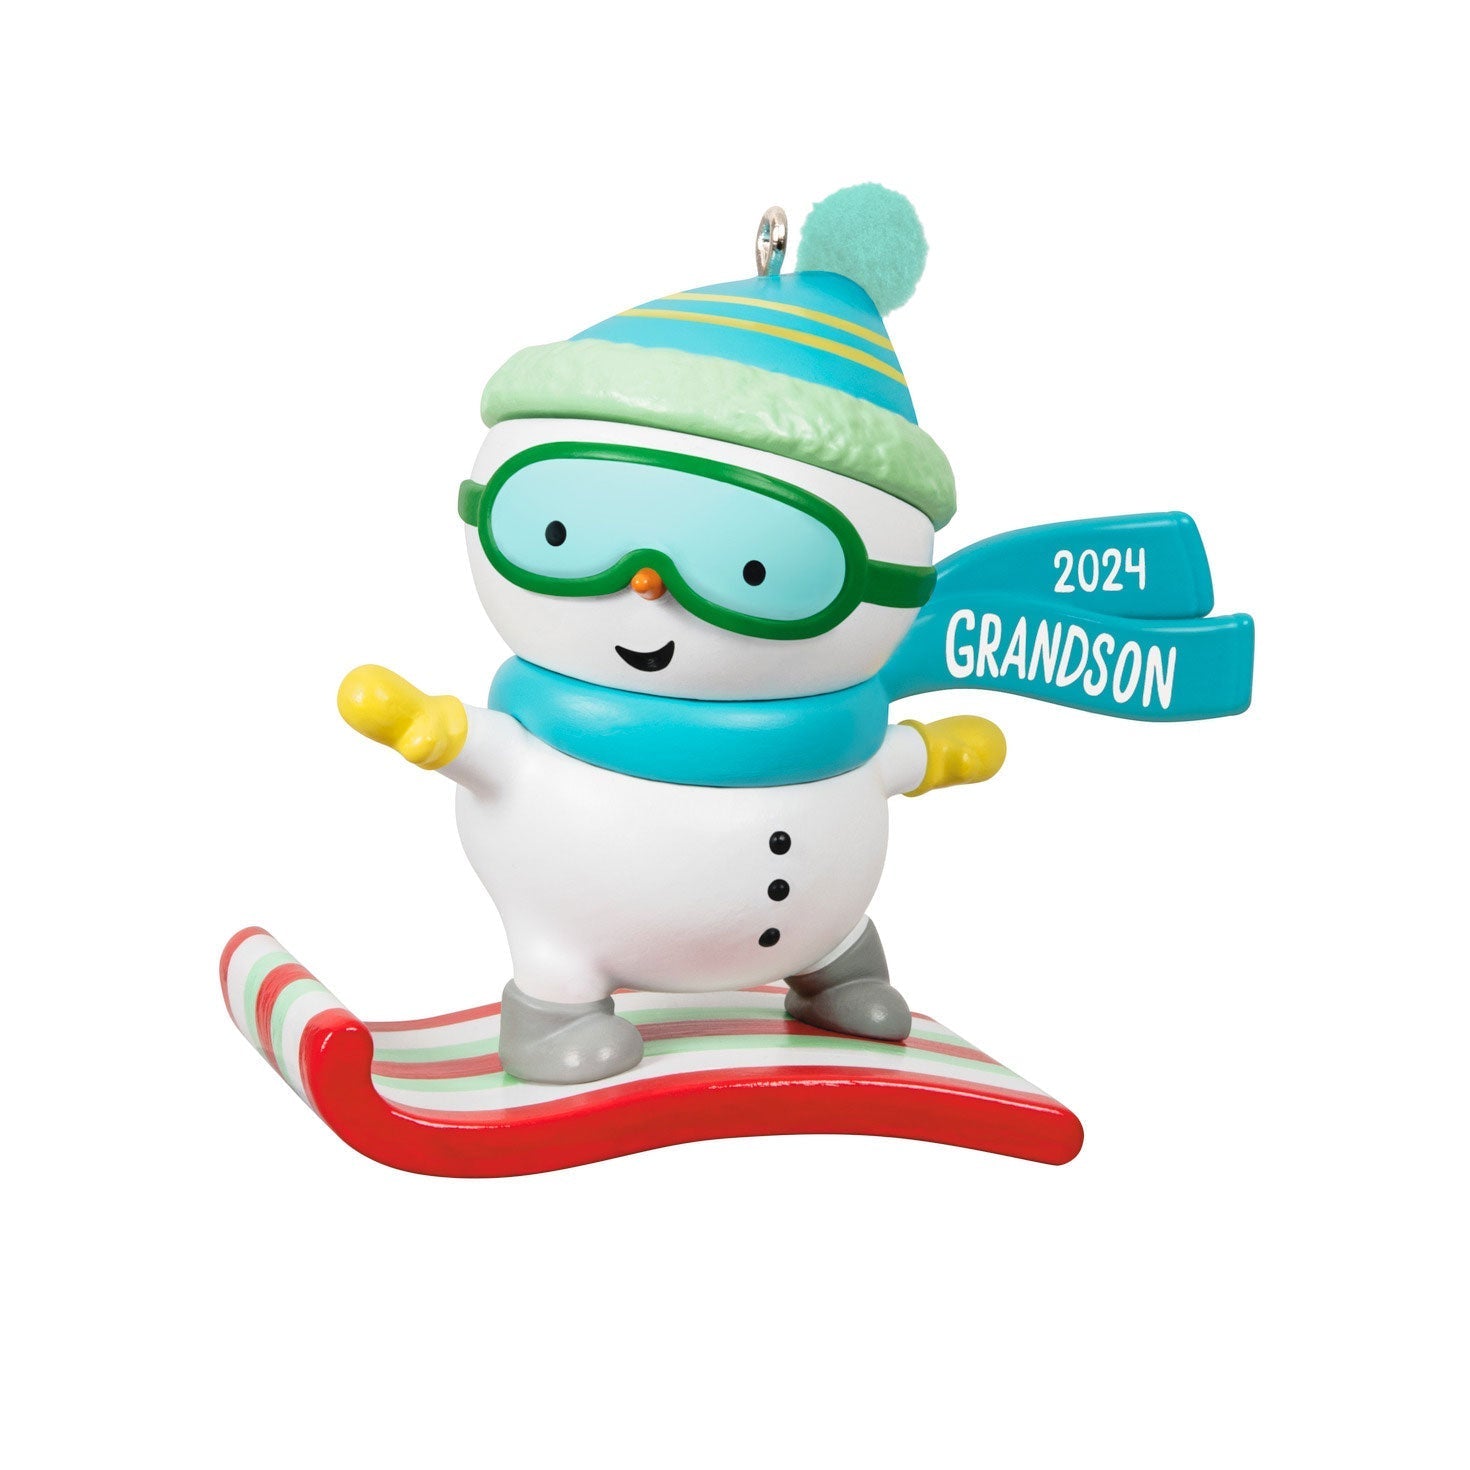 Grandson Snowboarding Snowman 2024 Keepsake Ornament